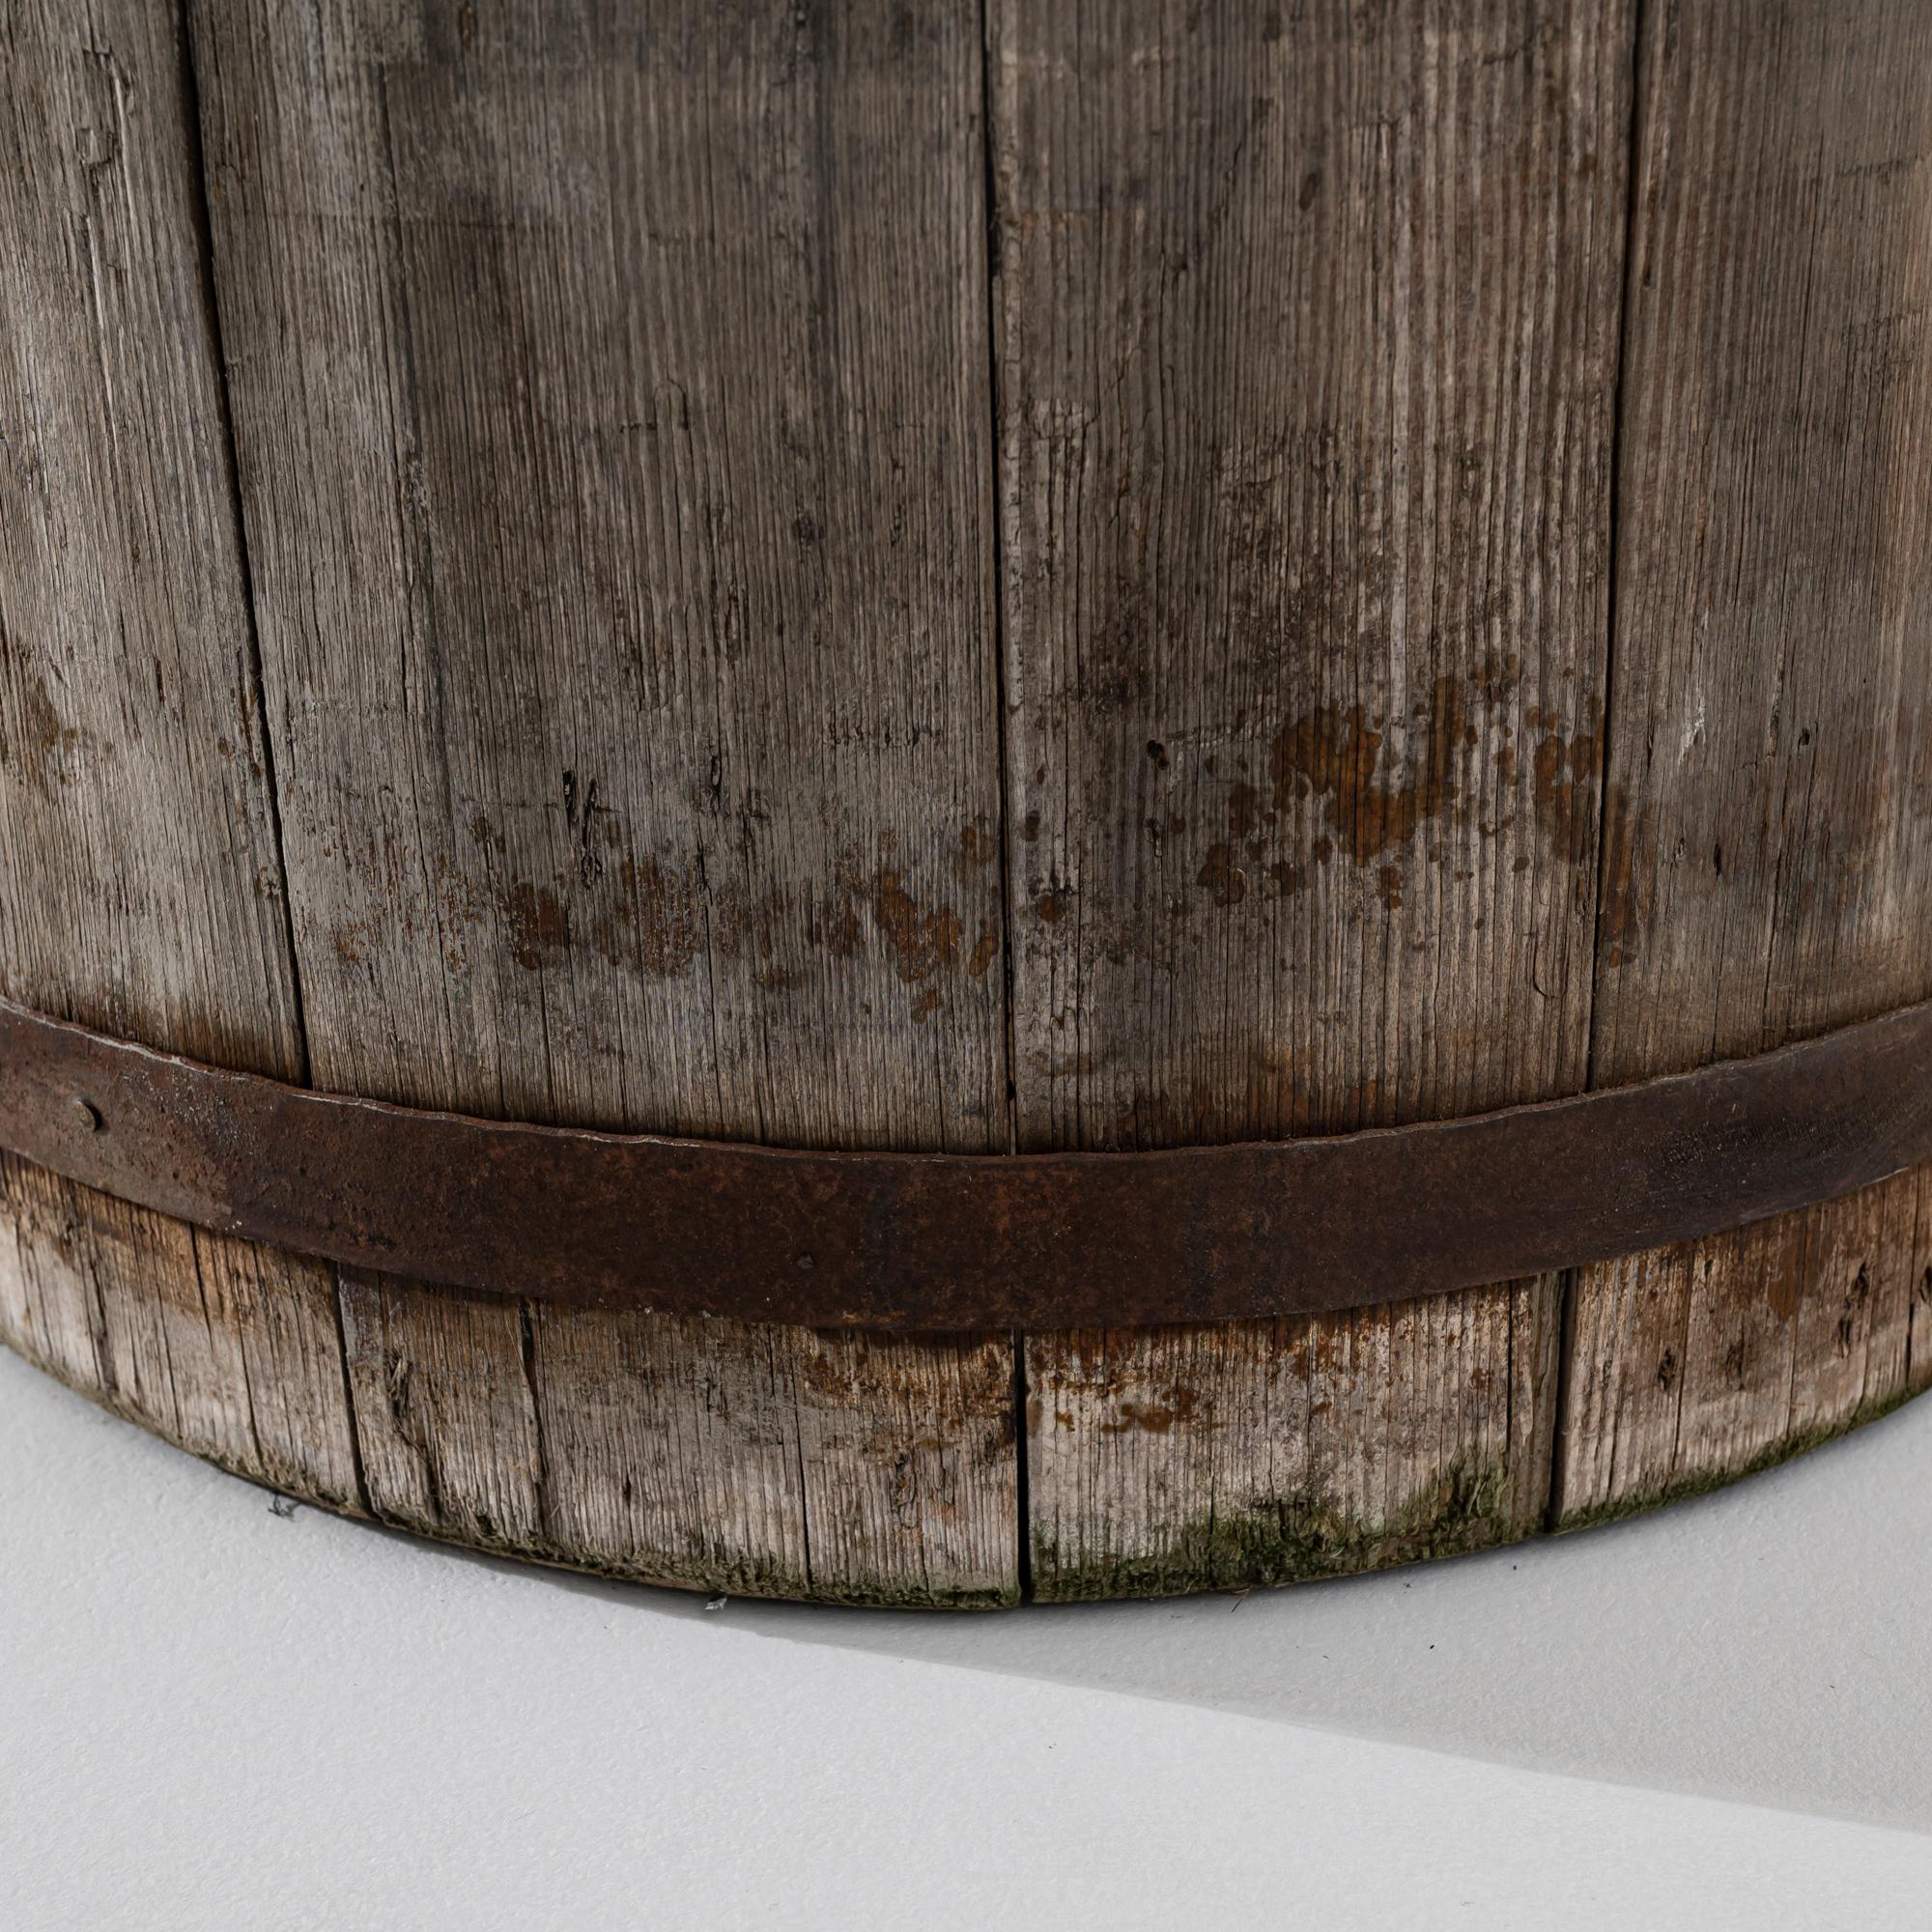 19th Century European Wooden Bucket For Sale 2